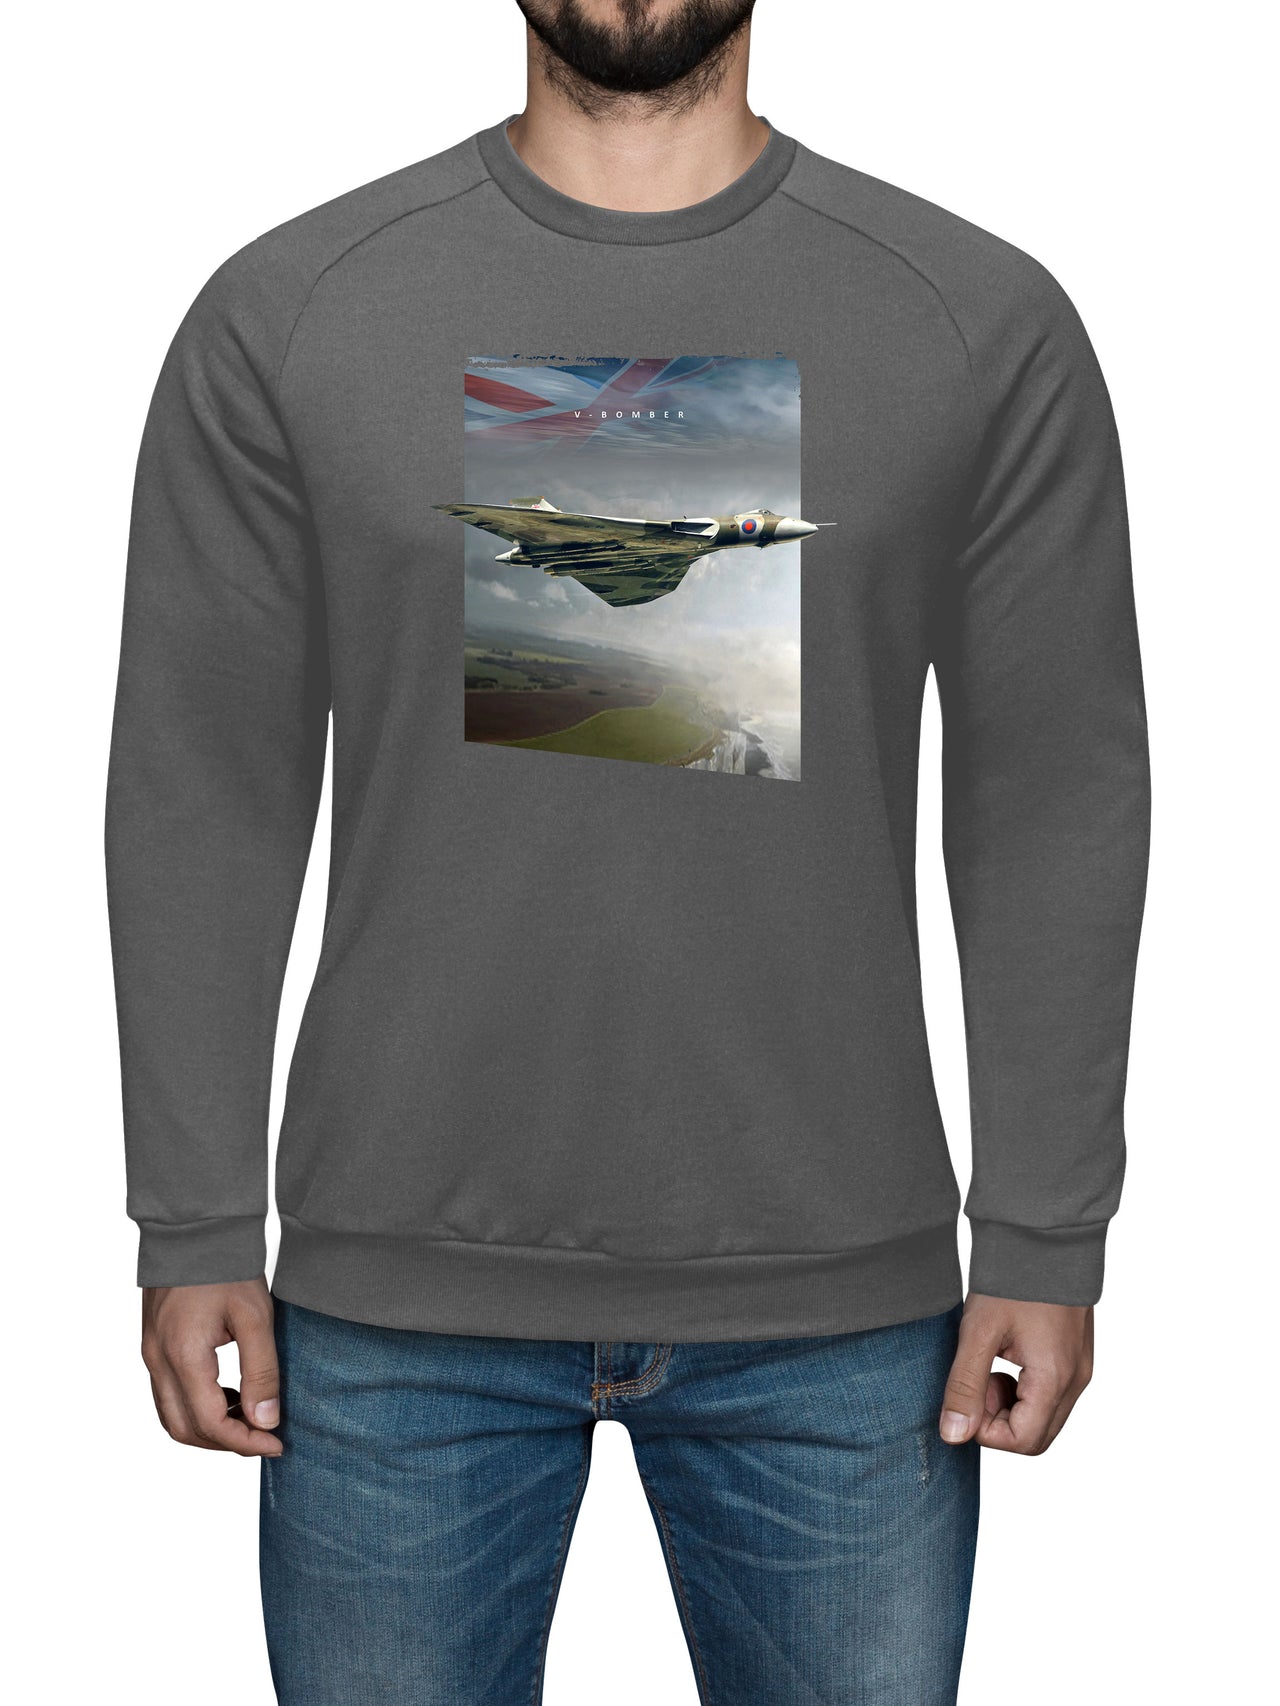 Avro Vulcan - Sweat Shirt